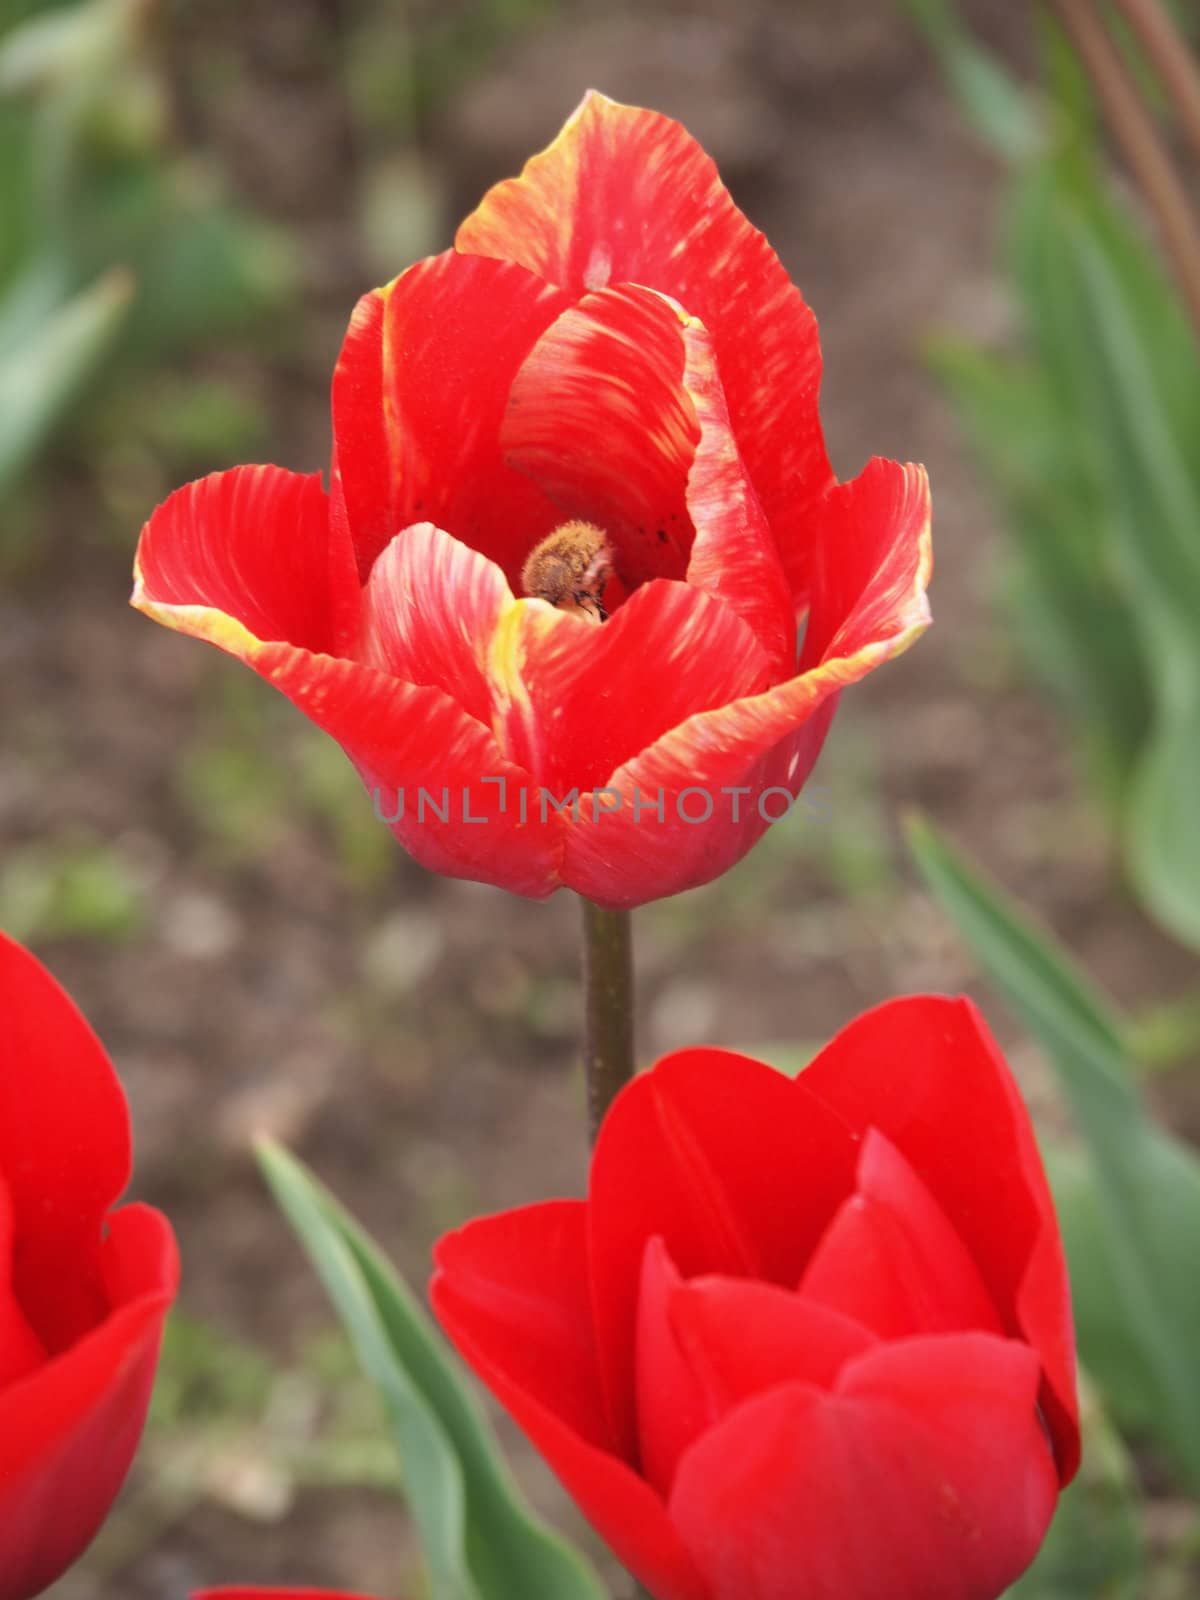 red tulip by Enskanto